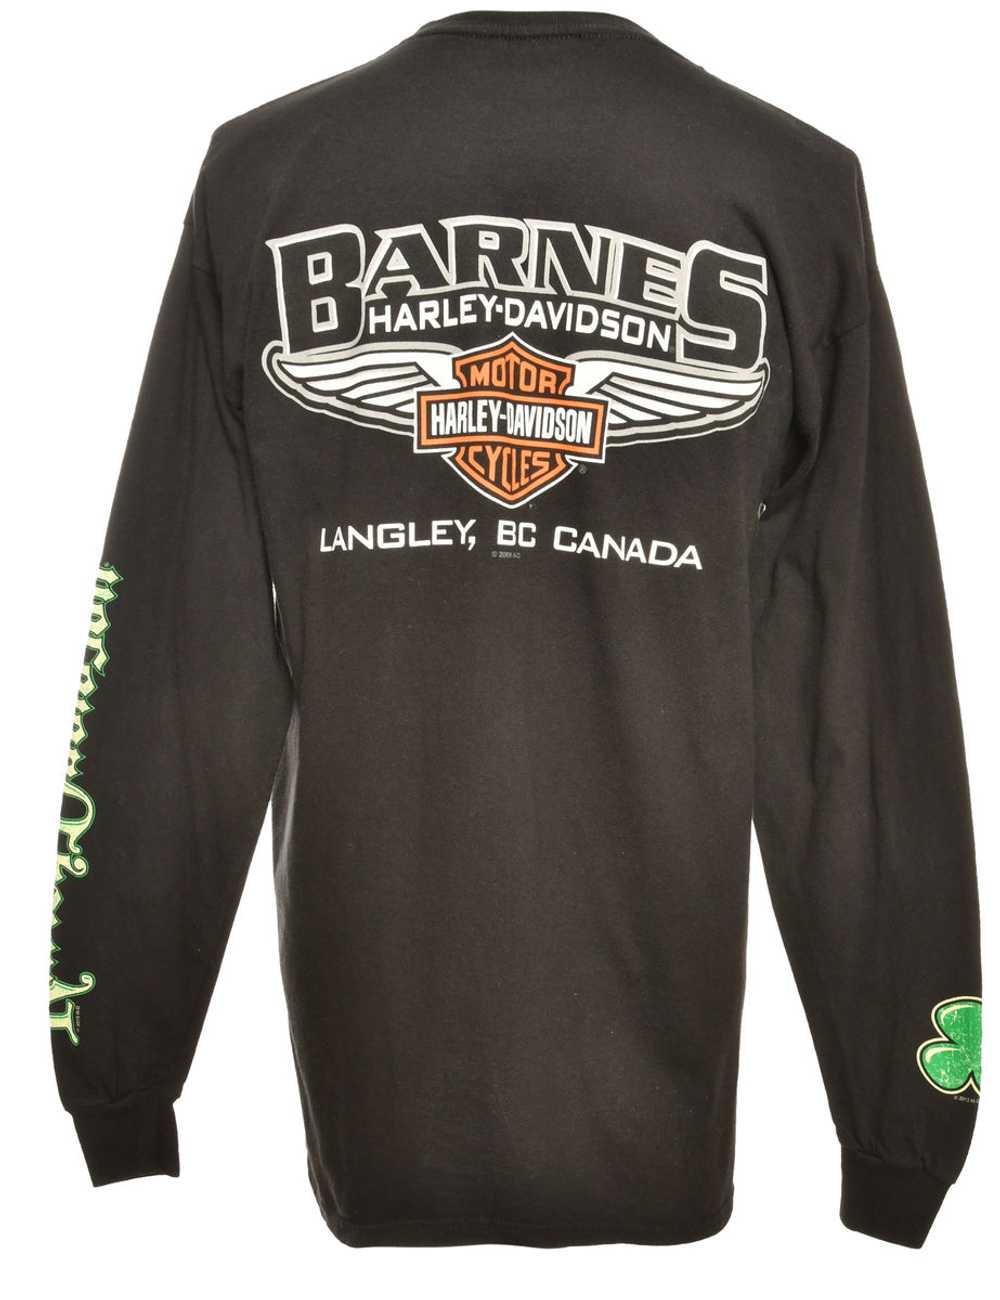 Harley Davidson Printed T-shirt - M - image 2